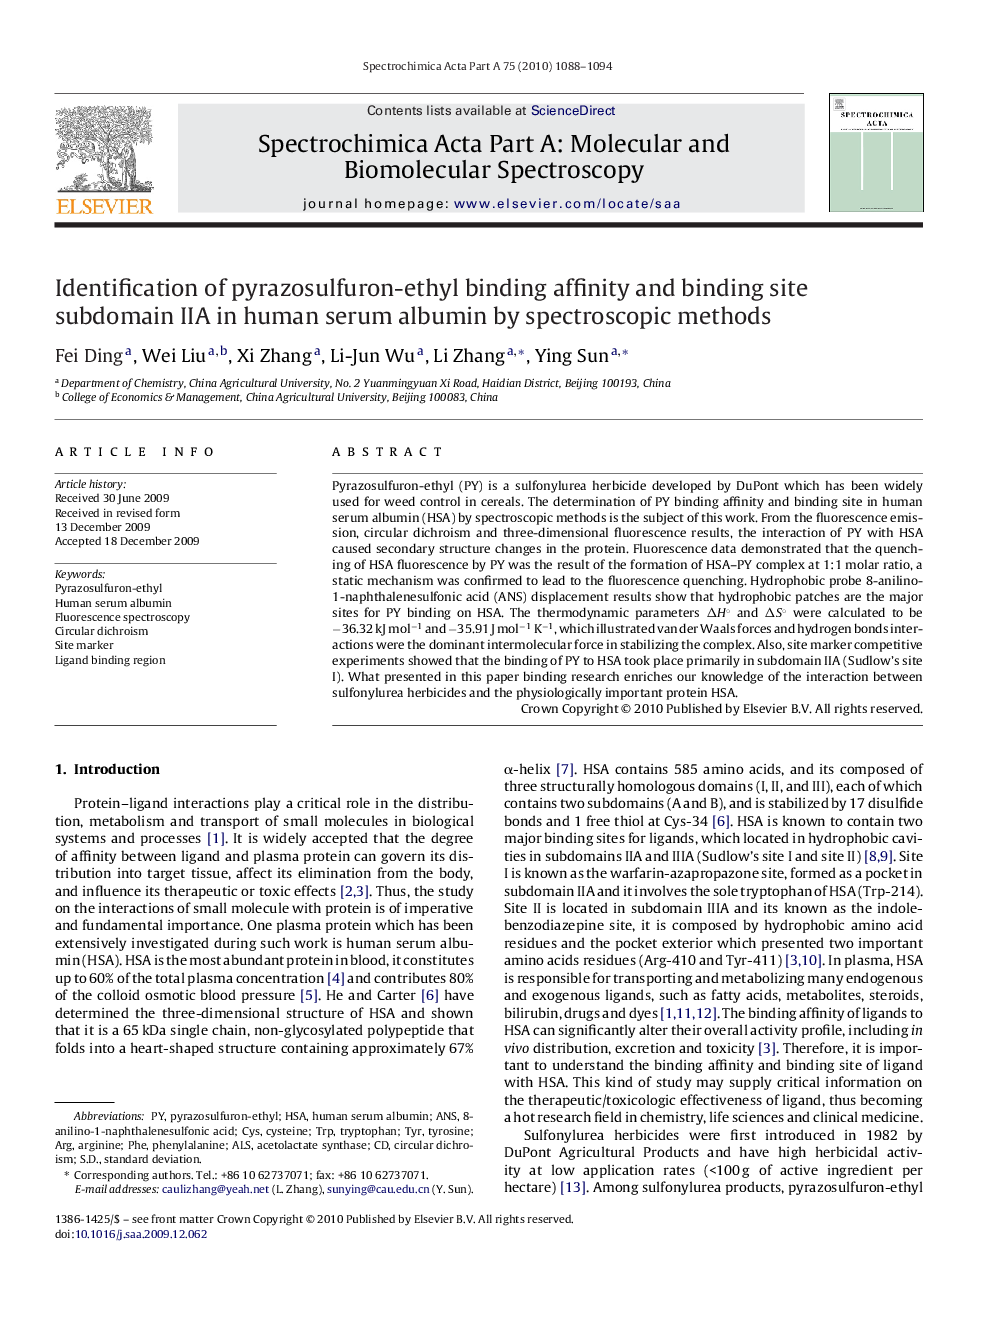 Identification of pyrazosulfuron-ethyl binding affinity and binding site subdomain IIA in human serum albumin by spectroscopic methods